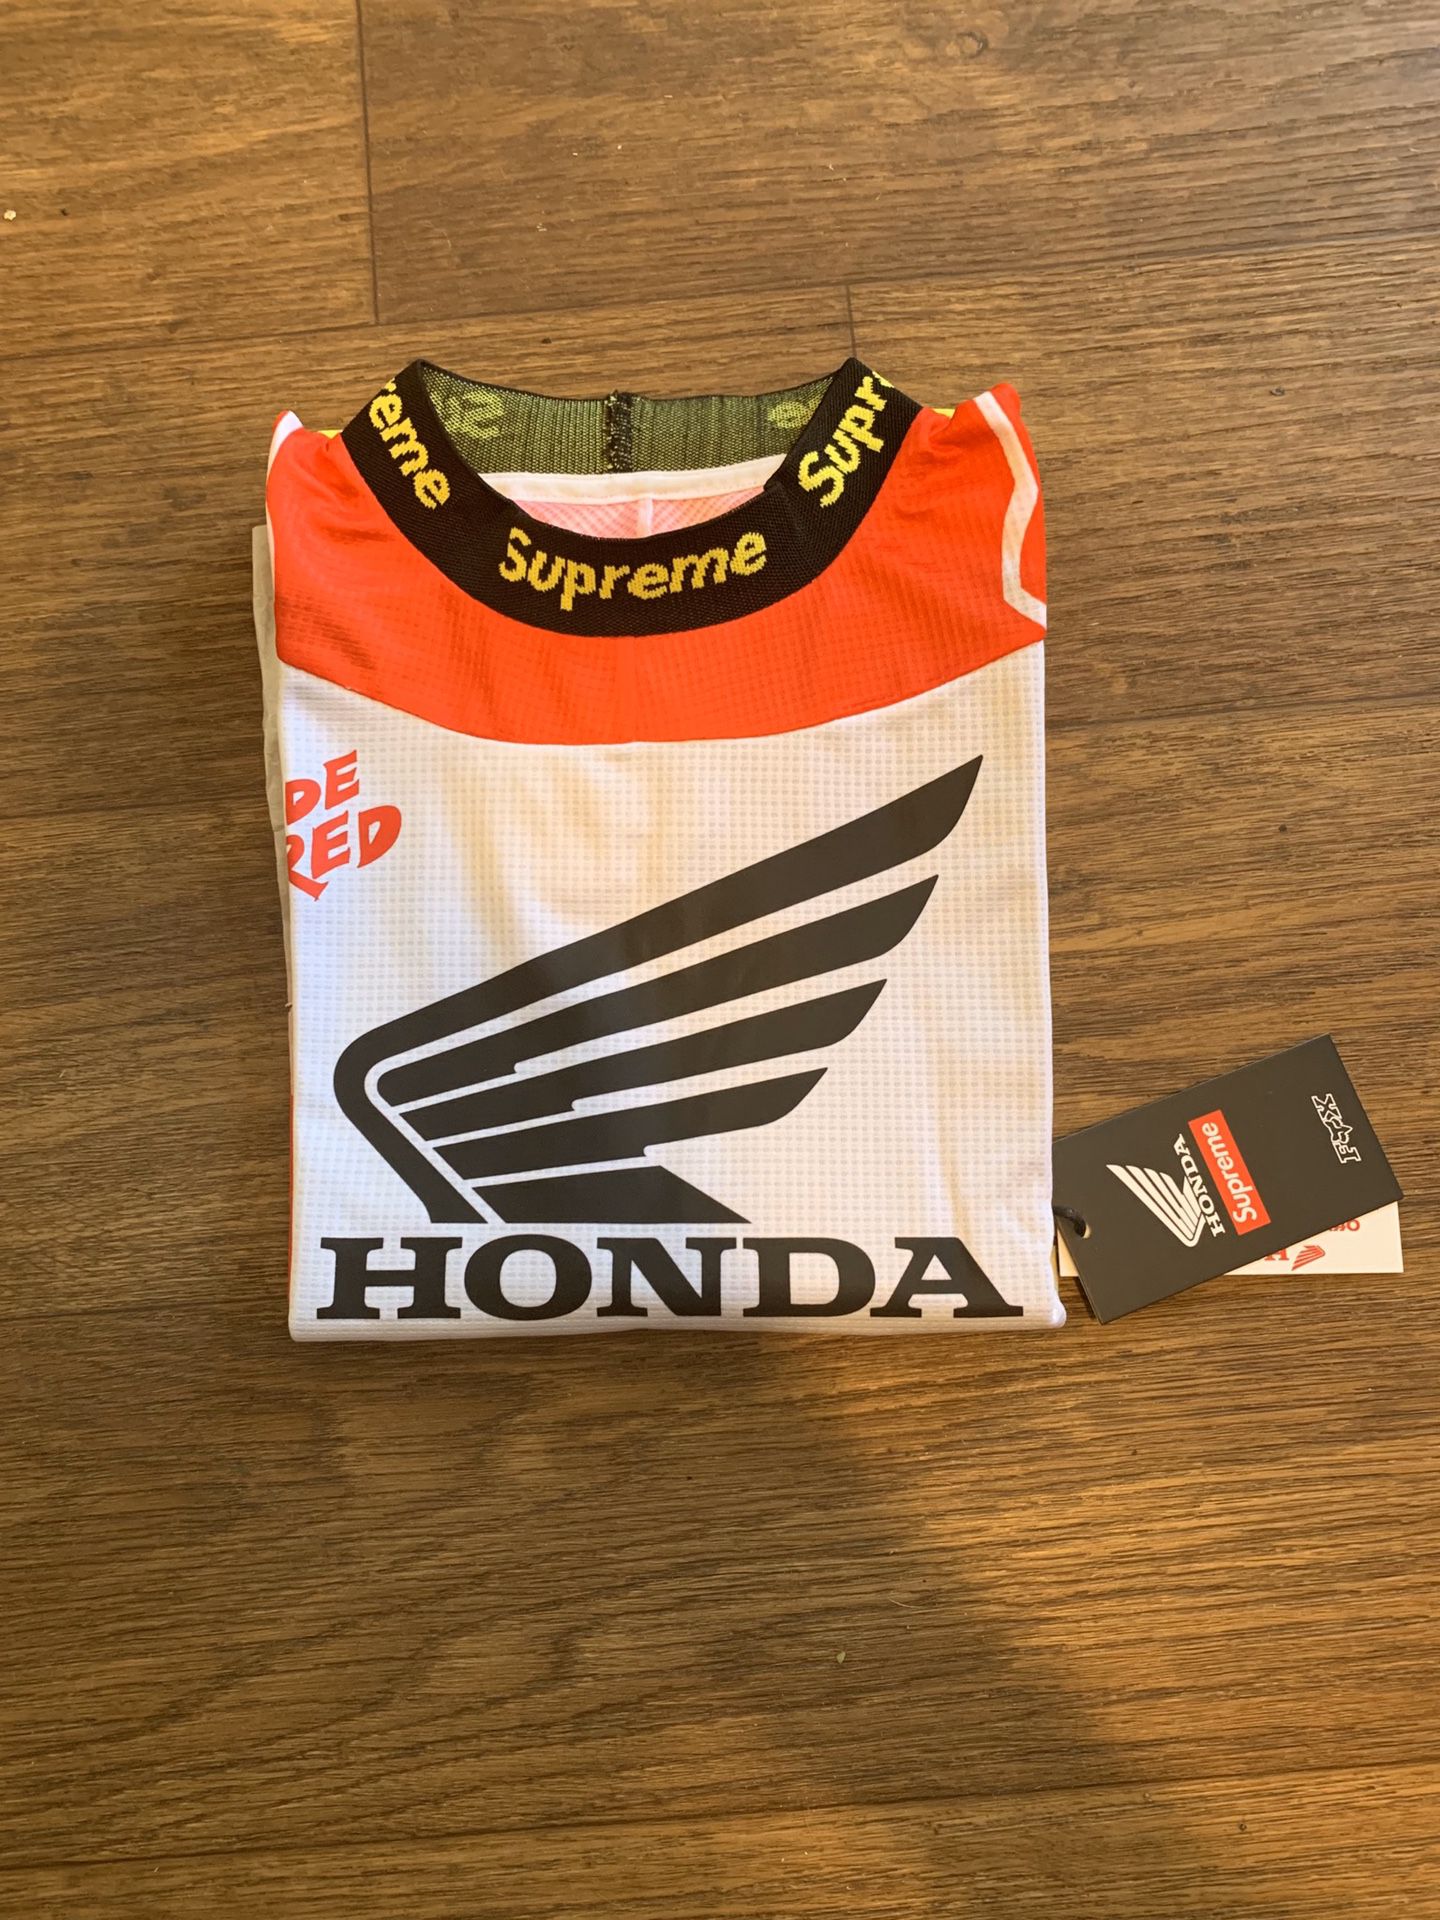 Supreme/Honda/Fox Racing Moto Jersey Top